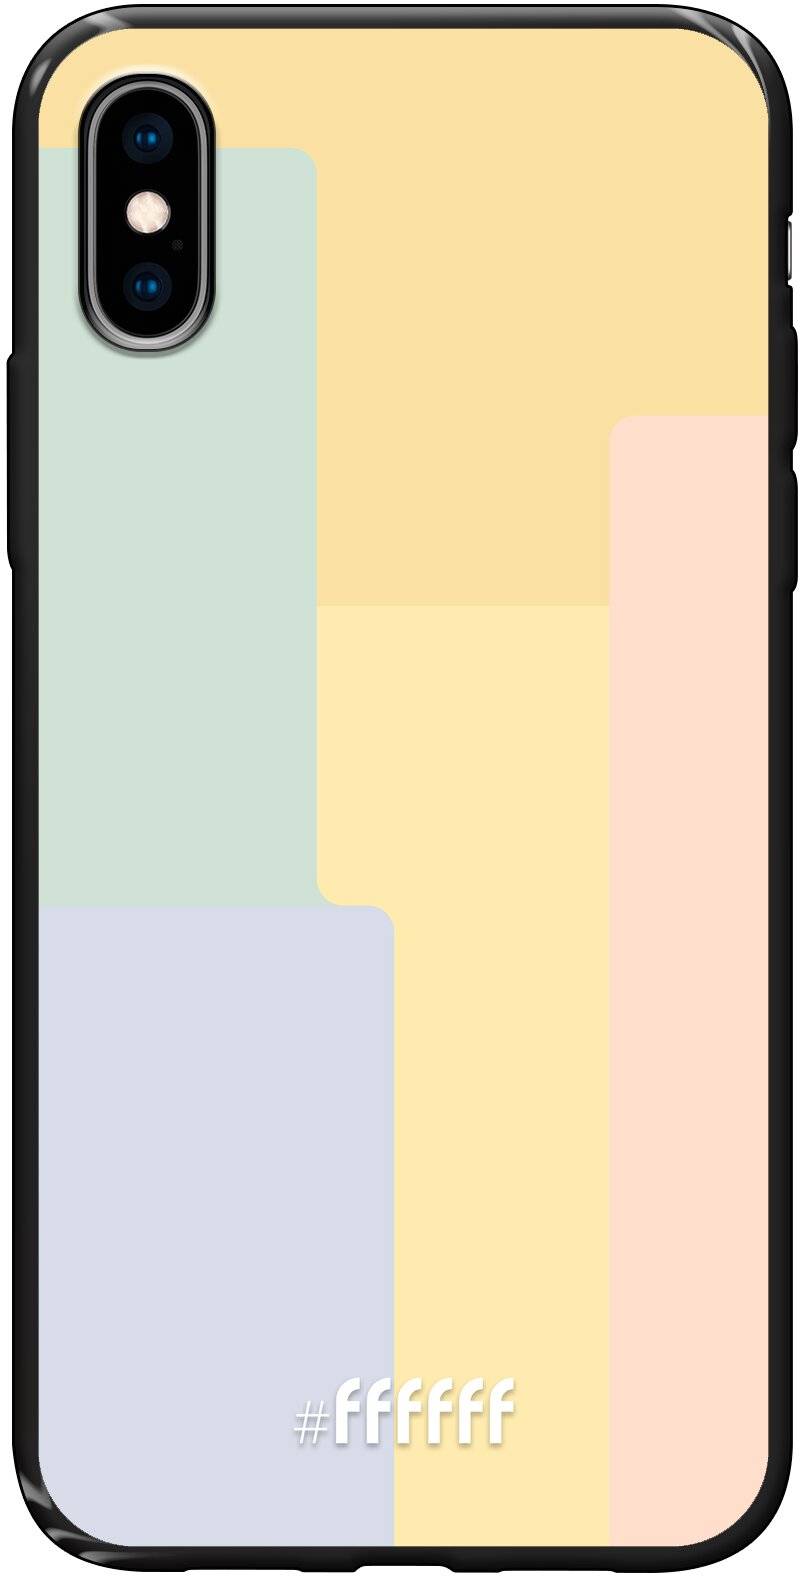 Springtime Palette iPhone X